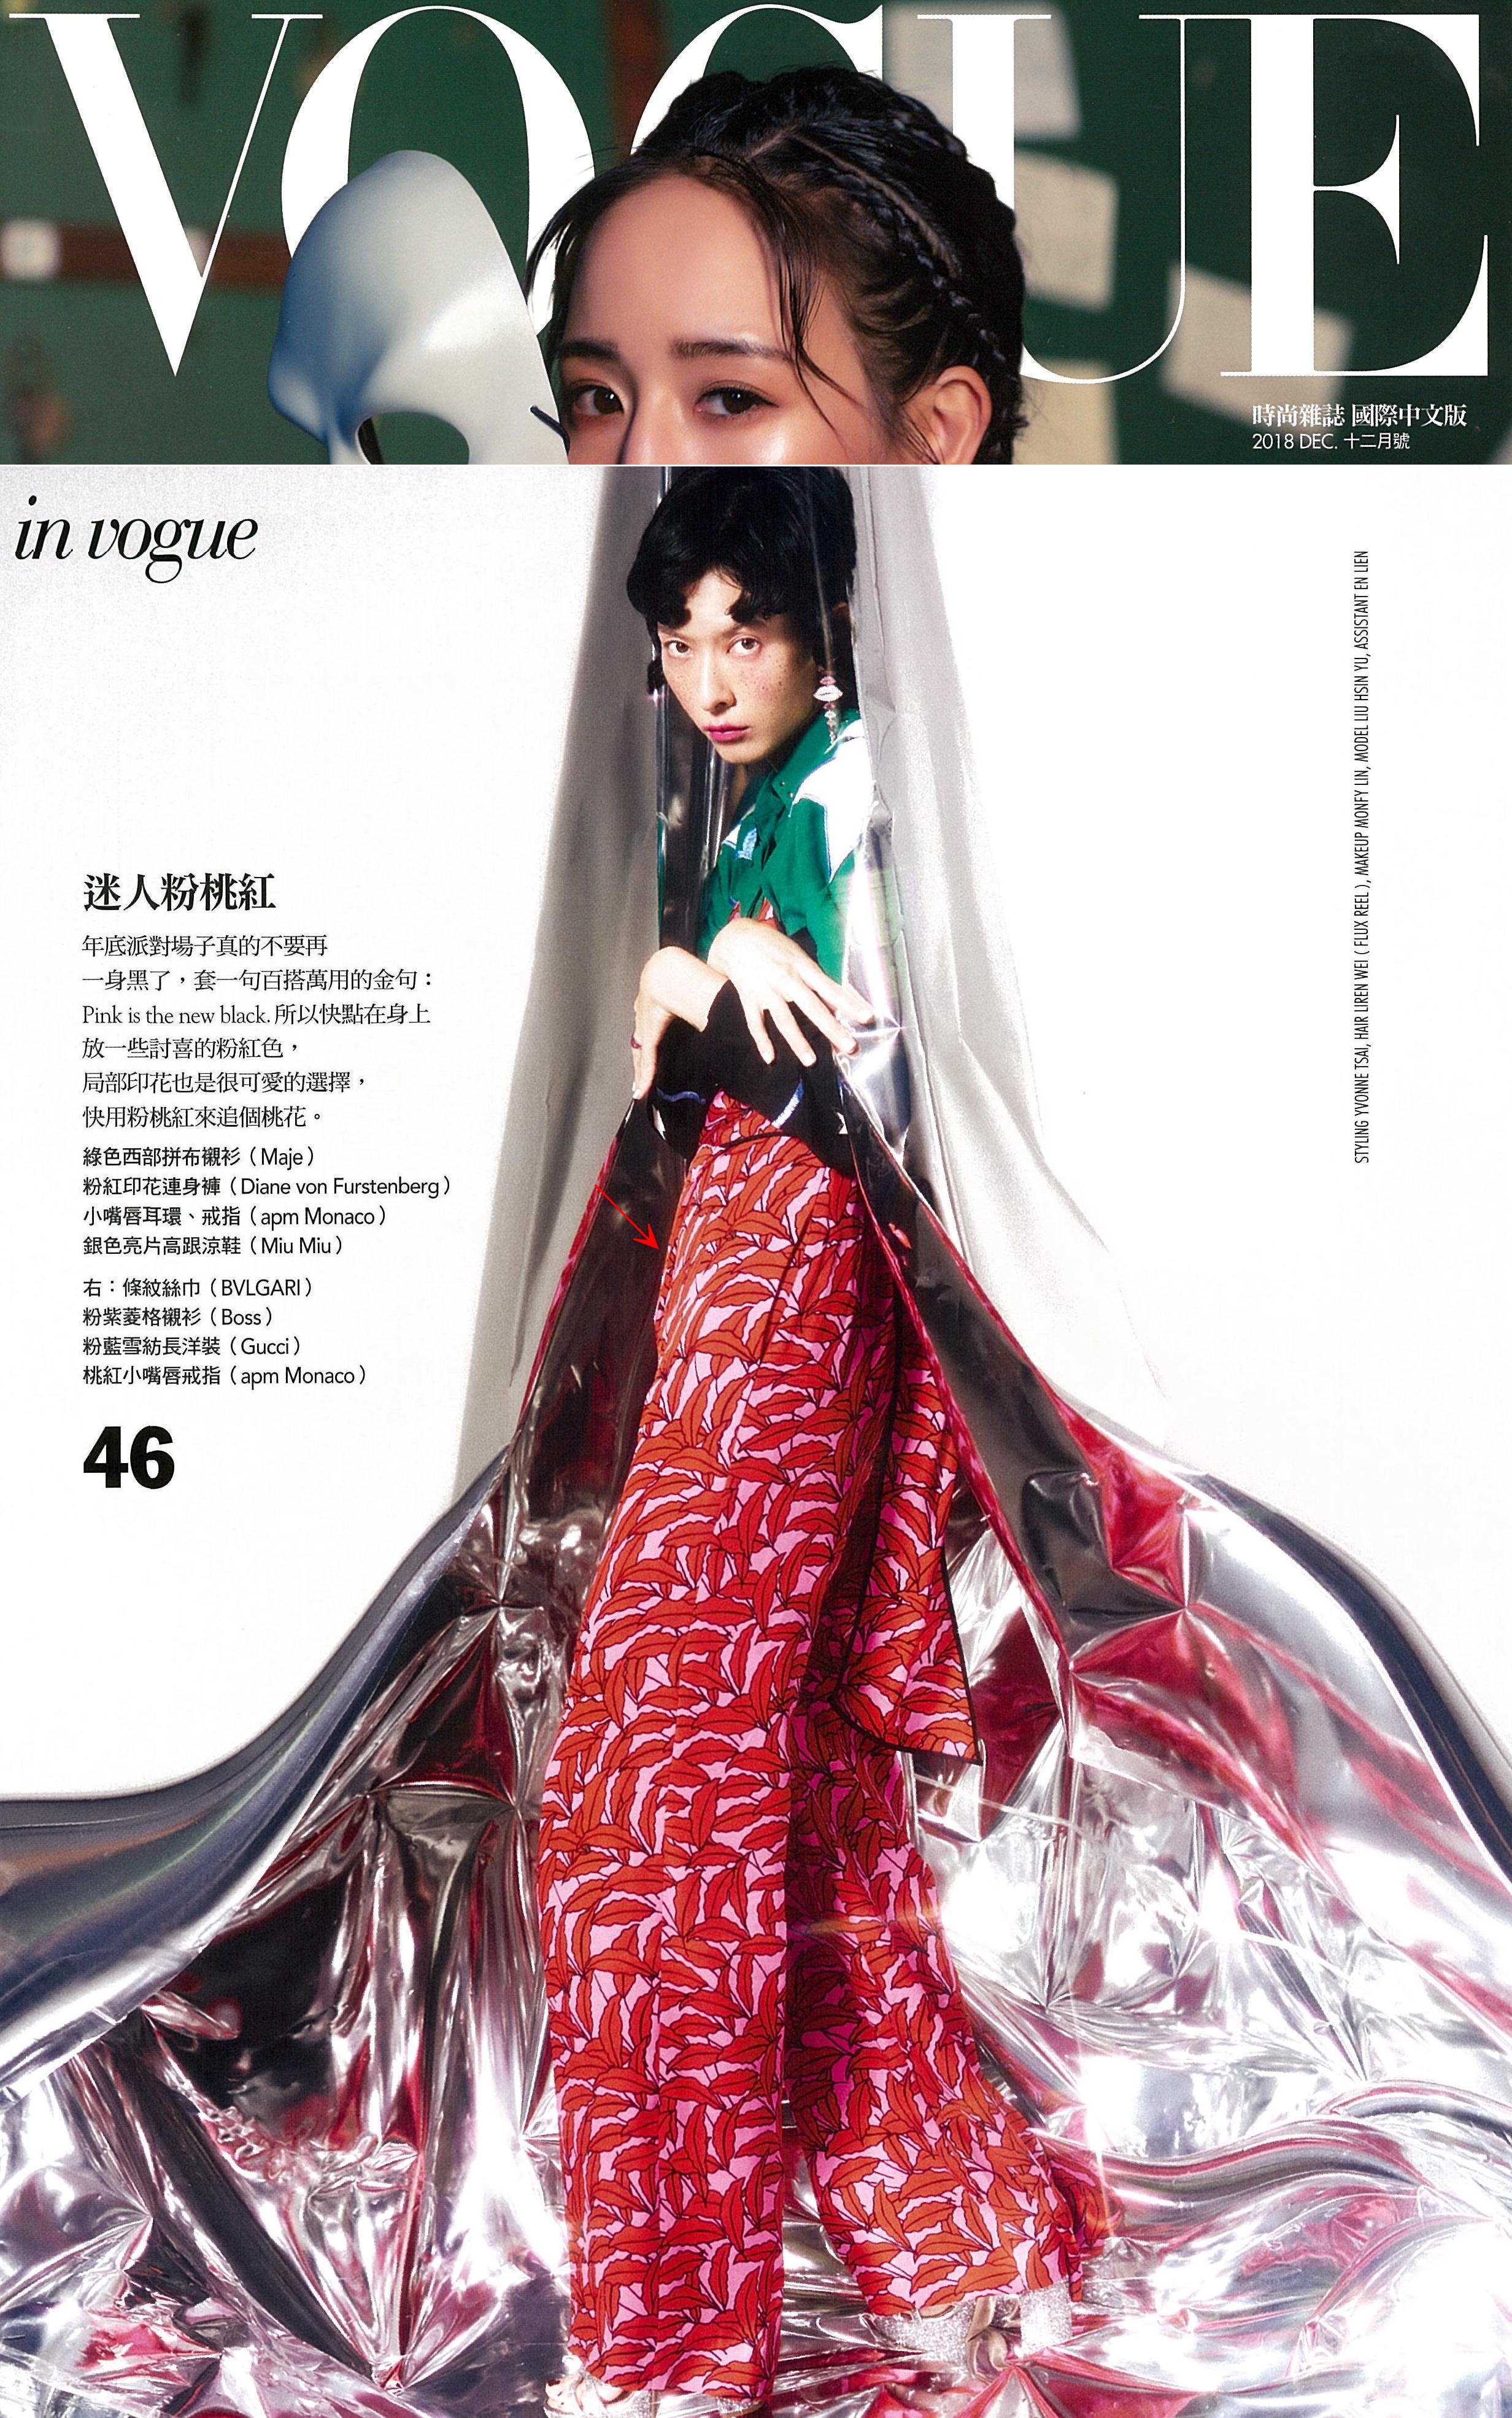 Taiwan_Vogue Taiwan_DVF(1).jpg